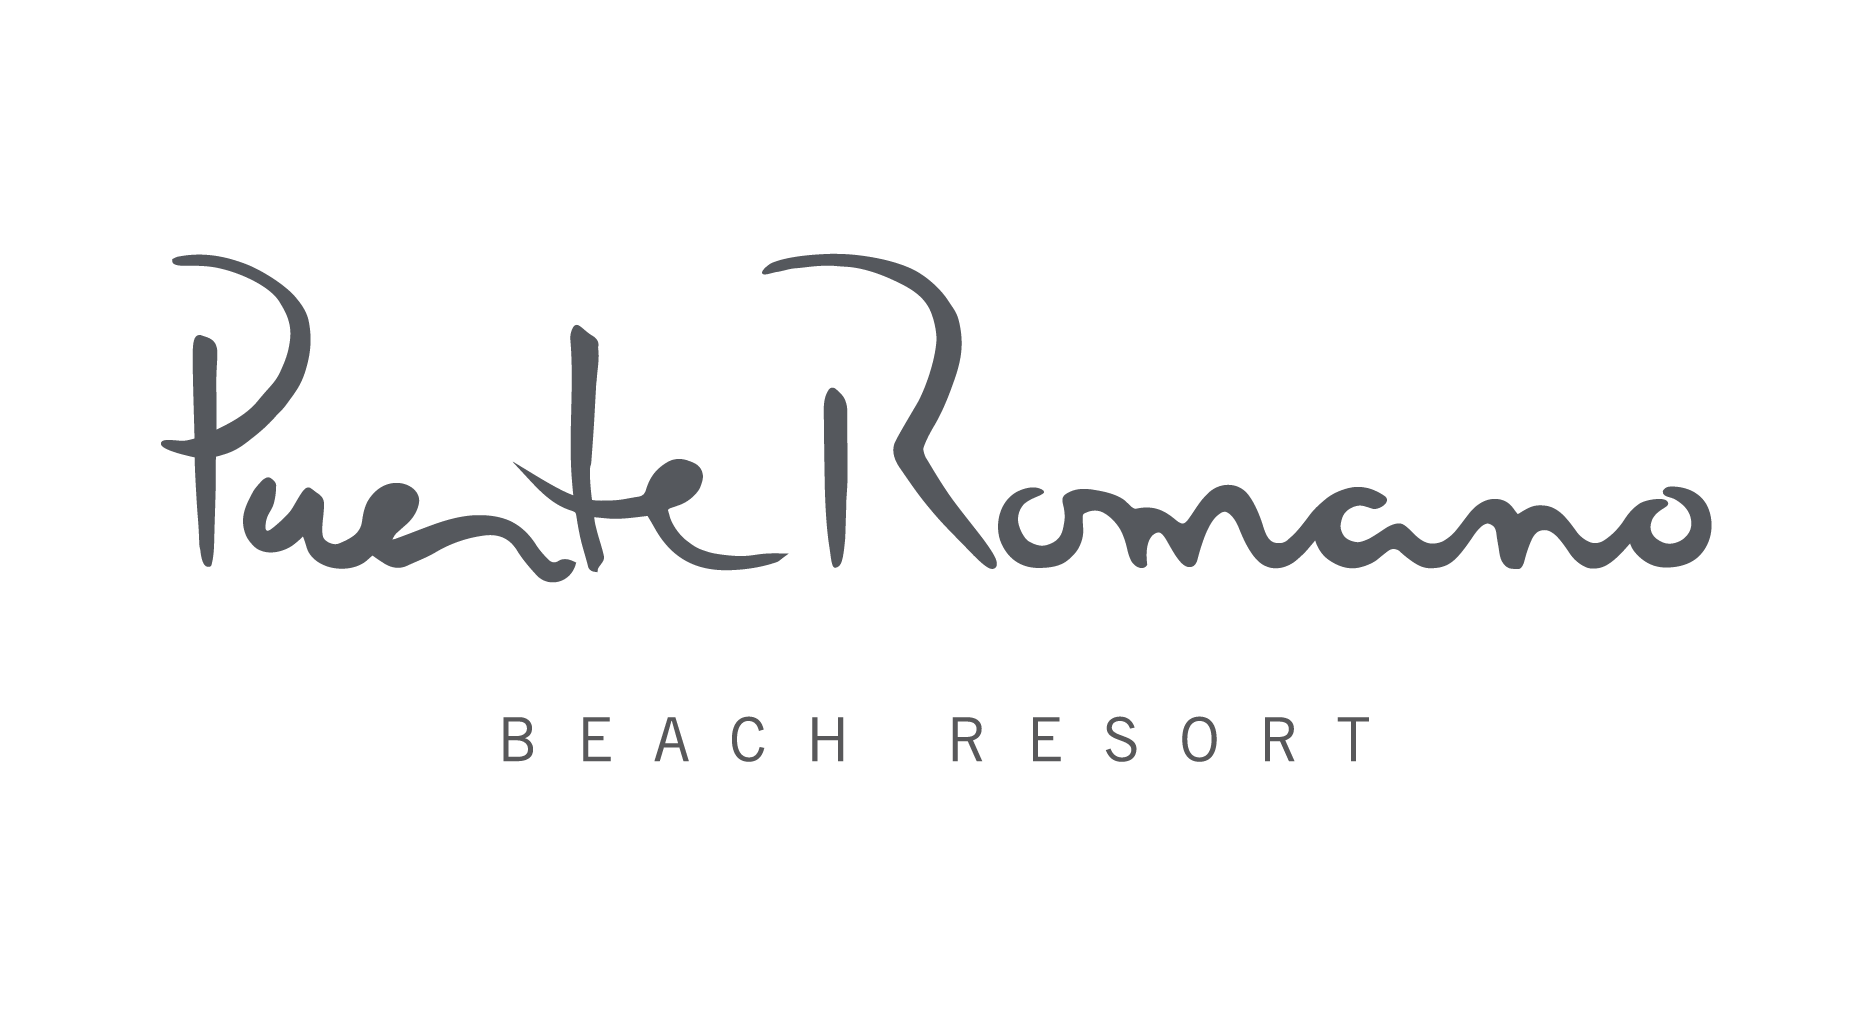 Puente Romano Beach Resort